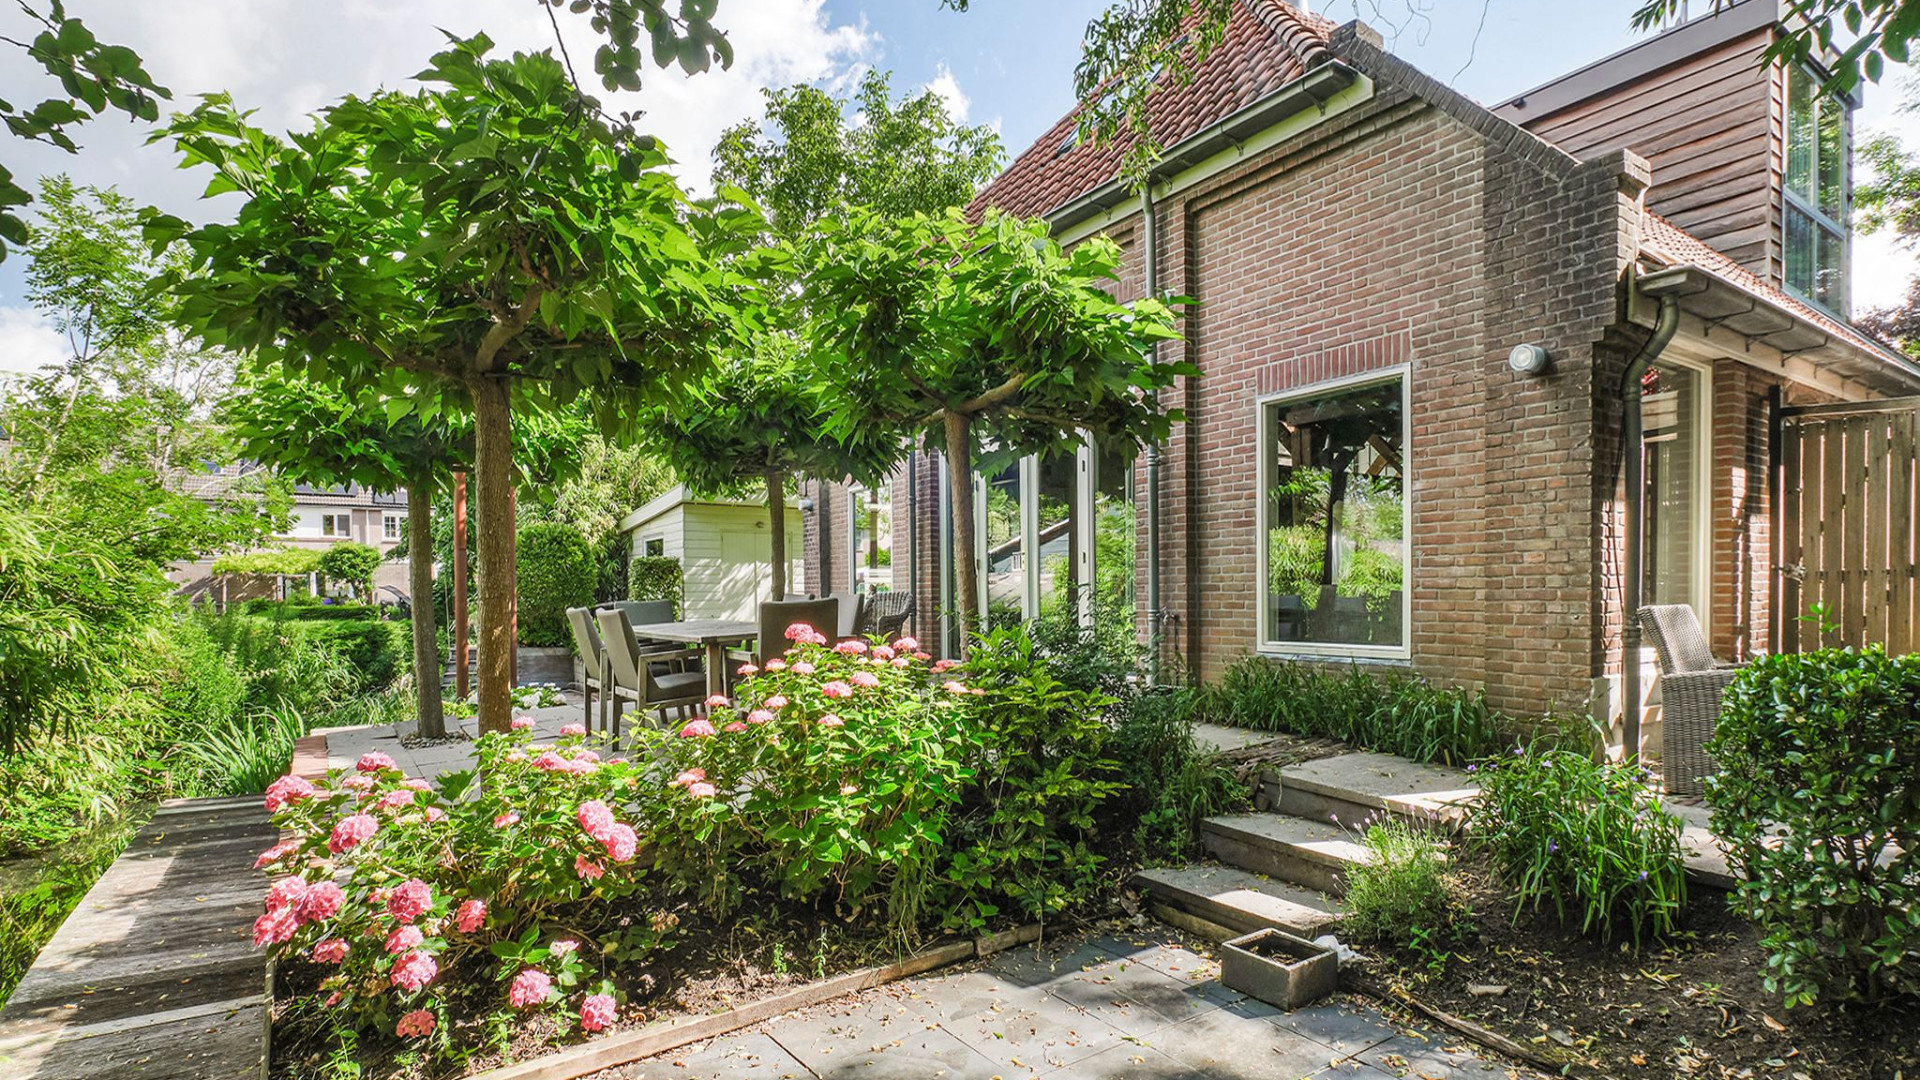 Saxofoniste Candy Dulfer koopt prachtige woonboerderij in Amsterdam. Zie alle foto's